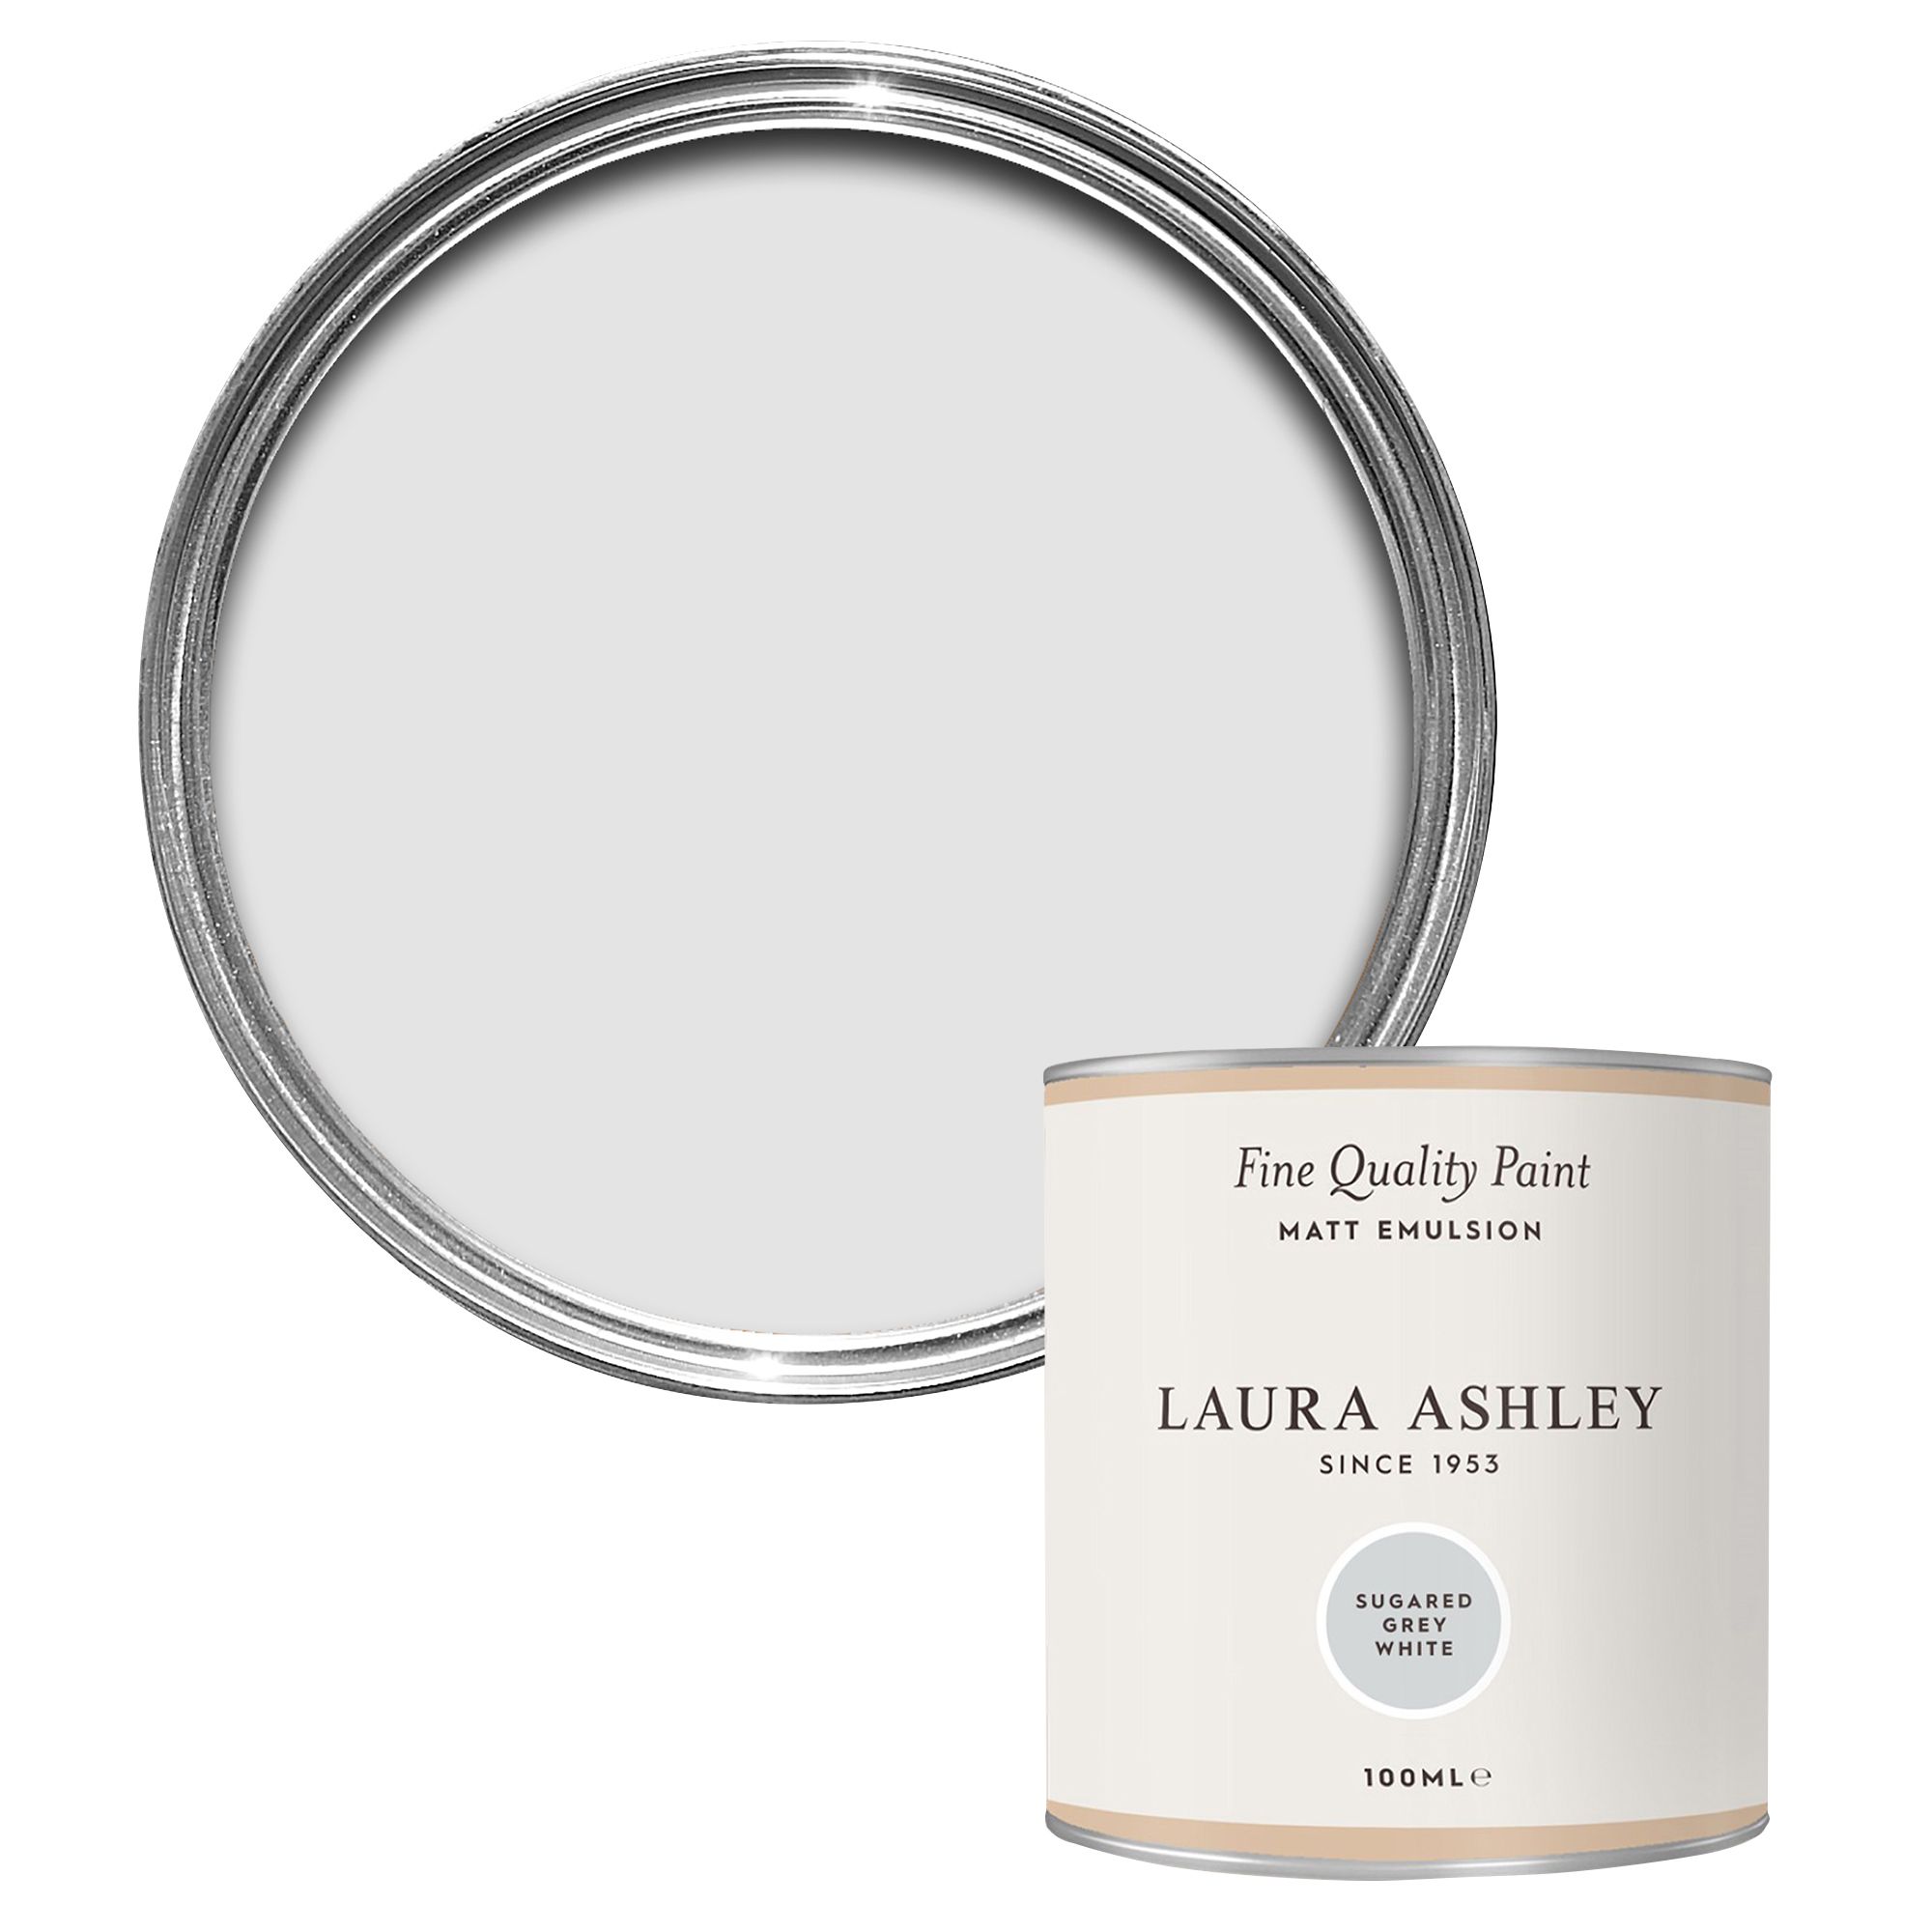 Laura Ashley Sugared Grey White Matt Emulsion paint, 100ml